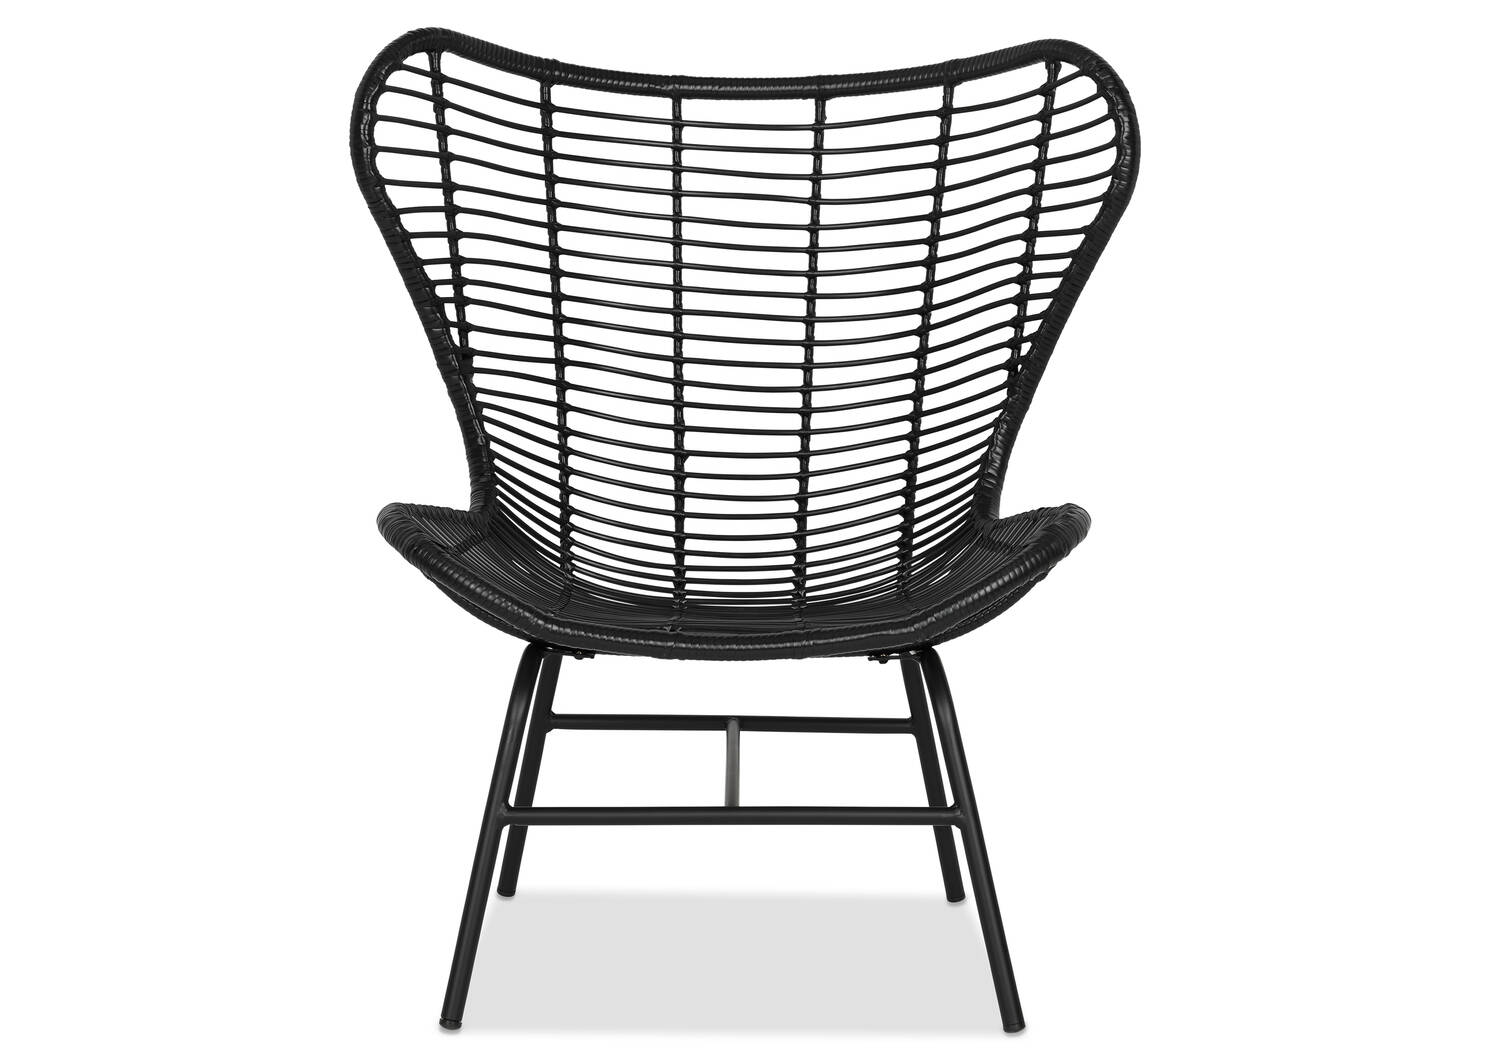 Majorca Chair -Black